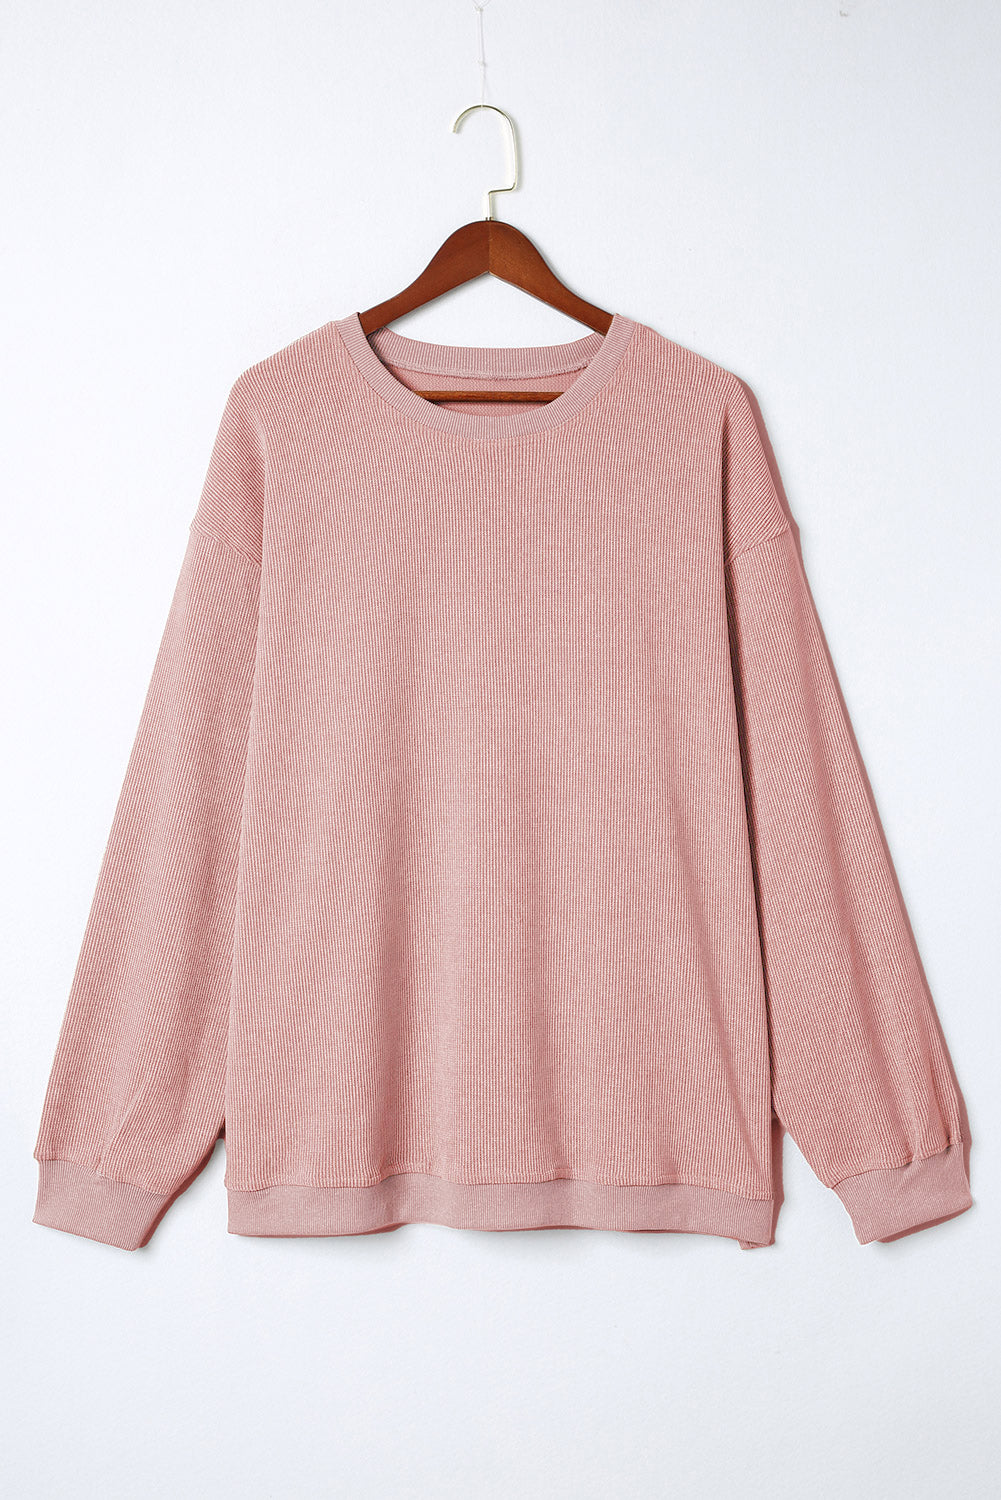 Pink Plus Size Corded Round Neck Sweatshirt - SELFTRITSS